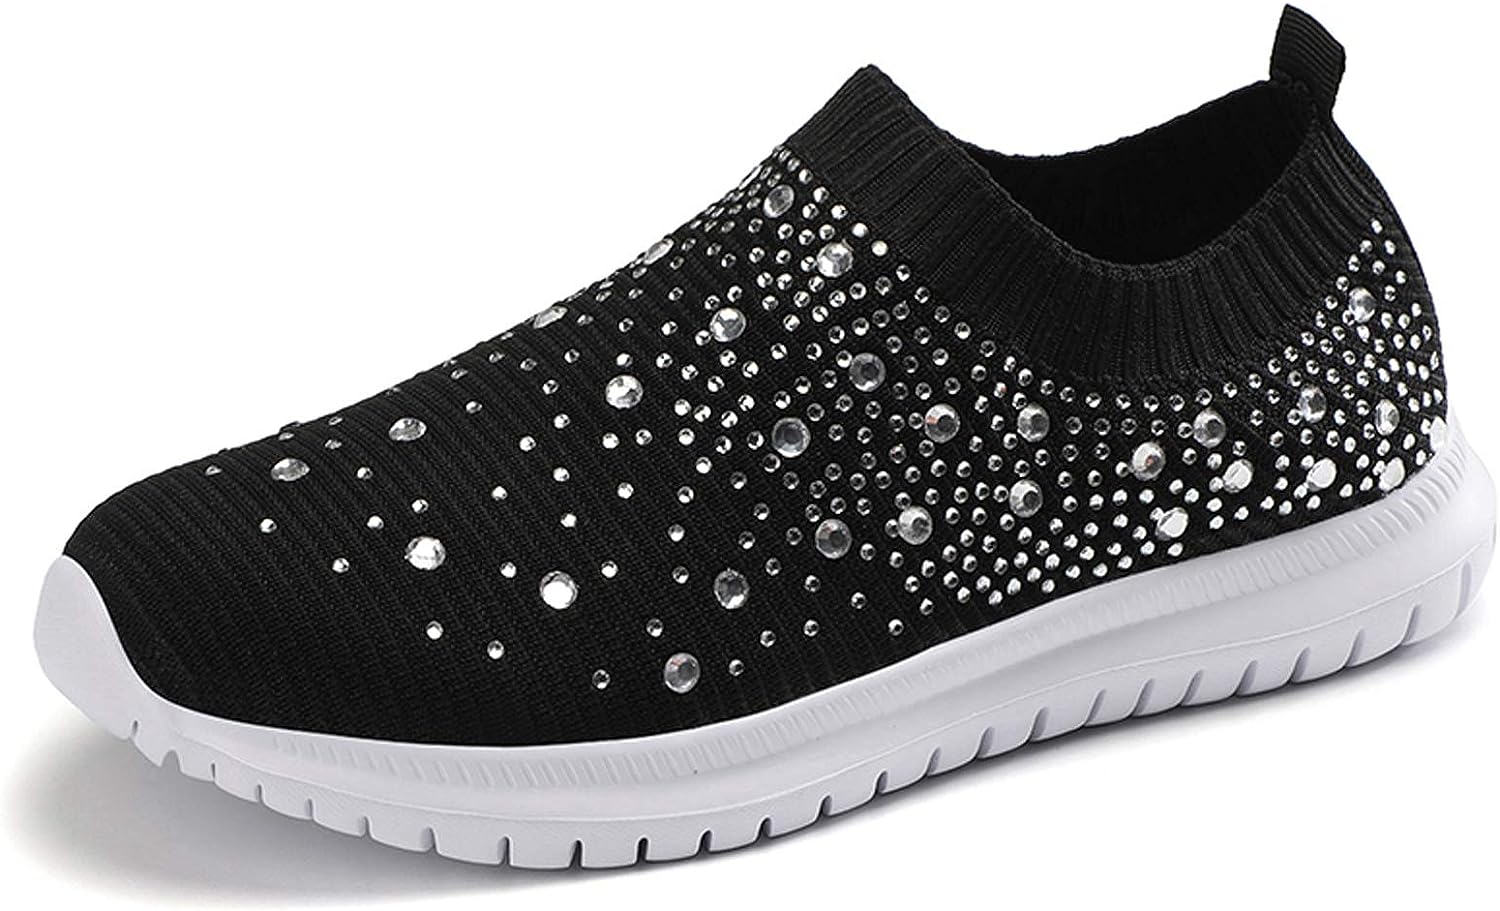 GOSPT Women's Mesh Walking Shoes Rhinestone Glitter [...]